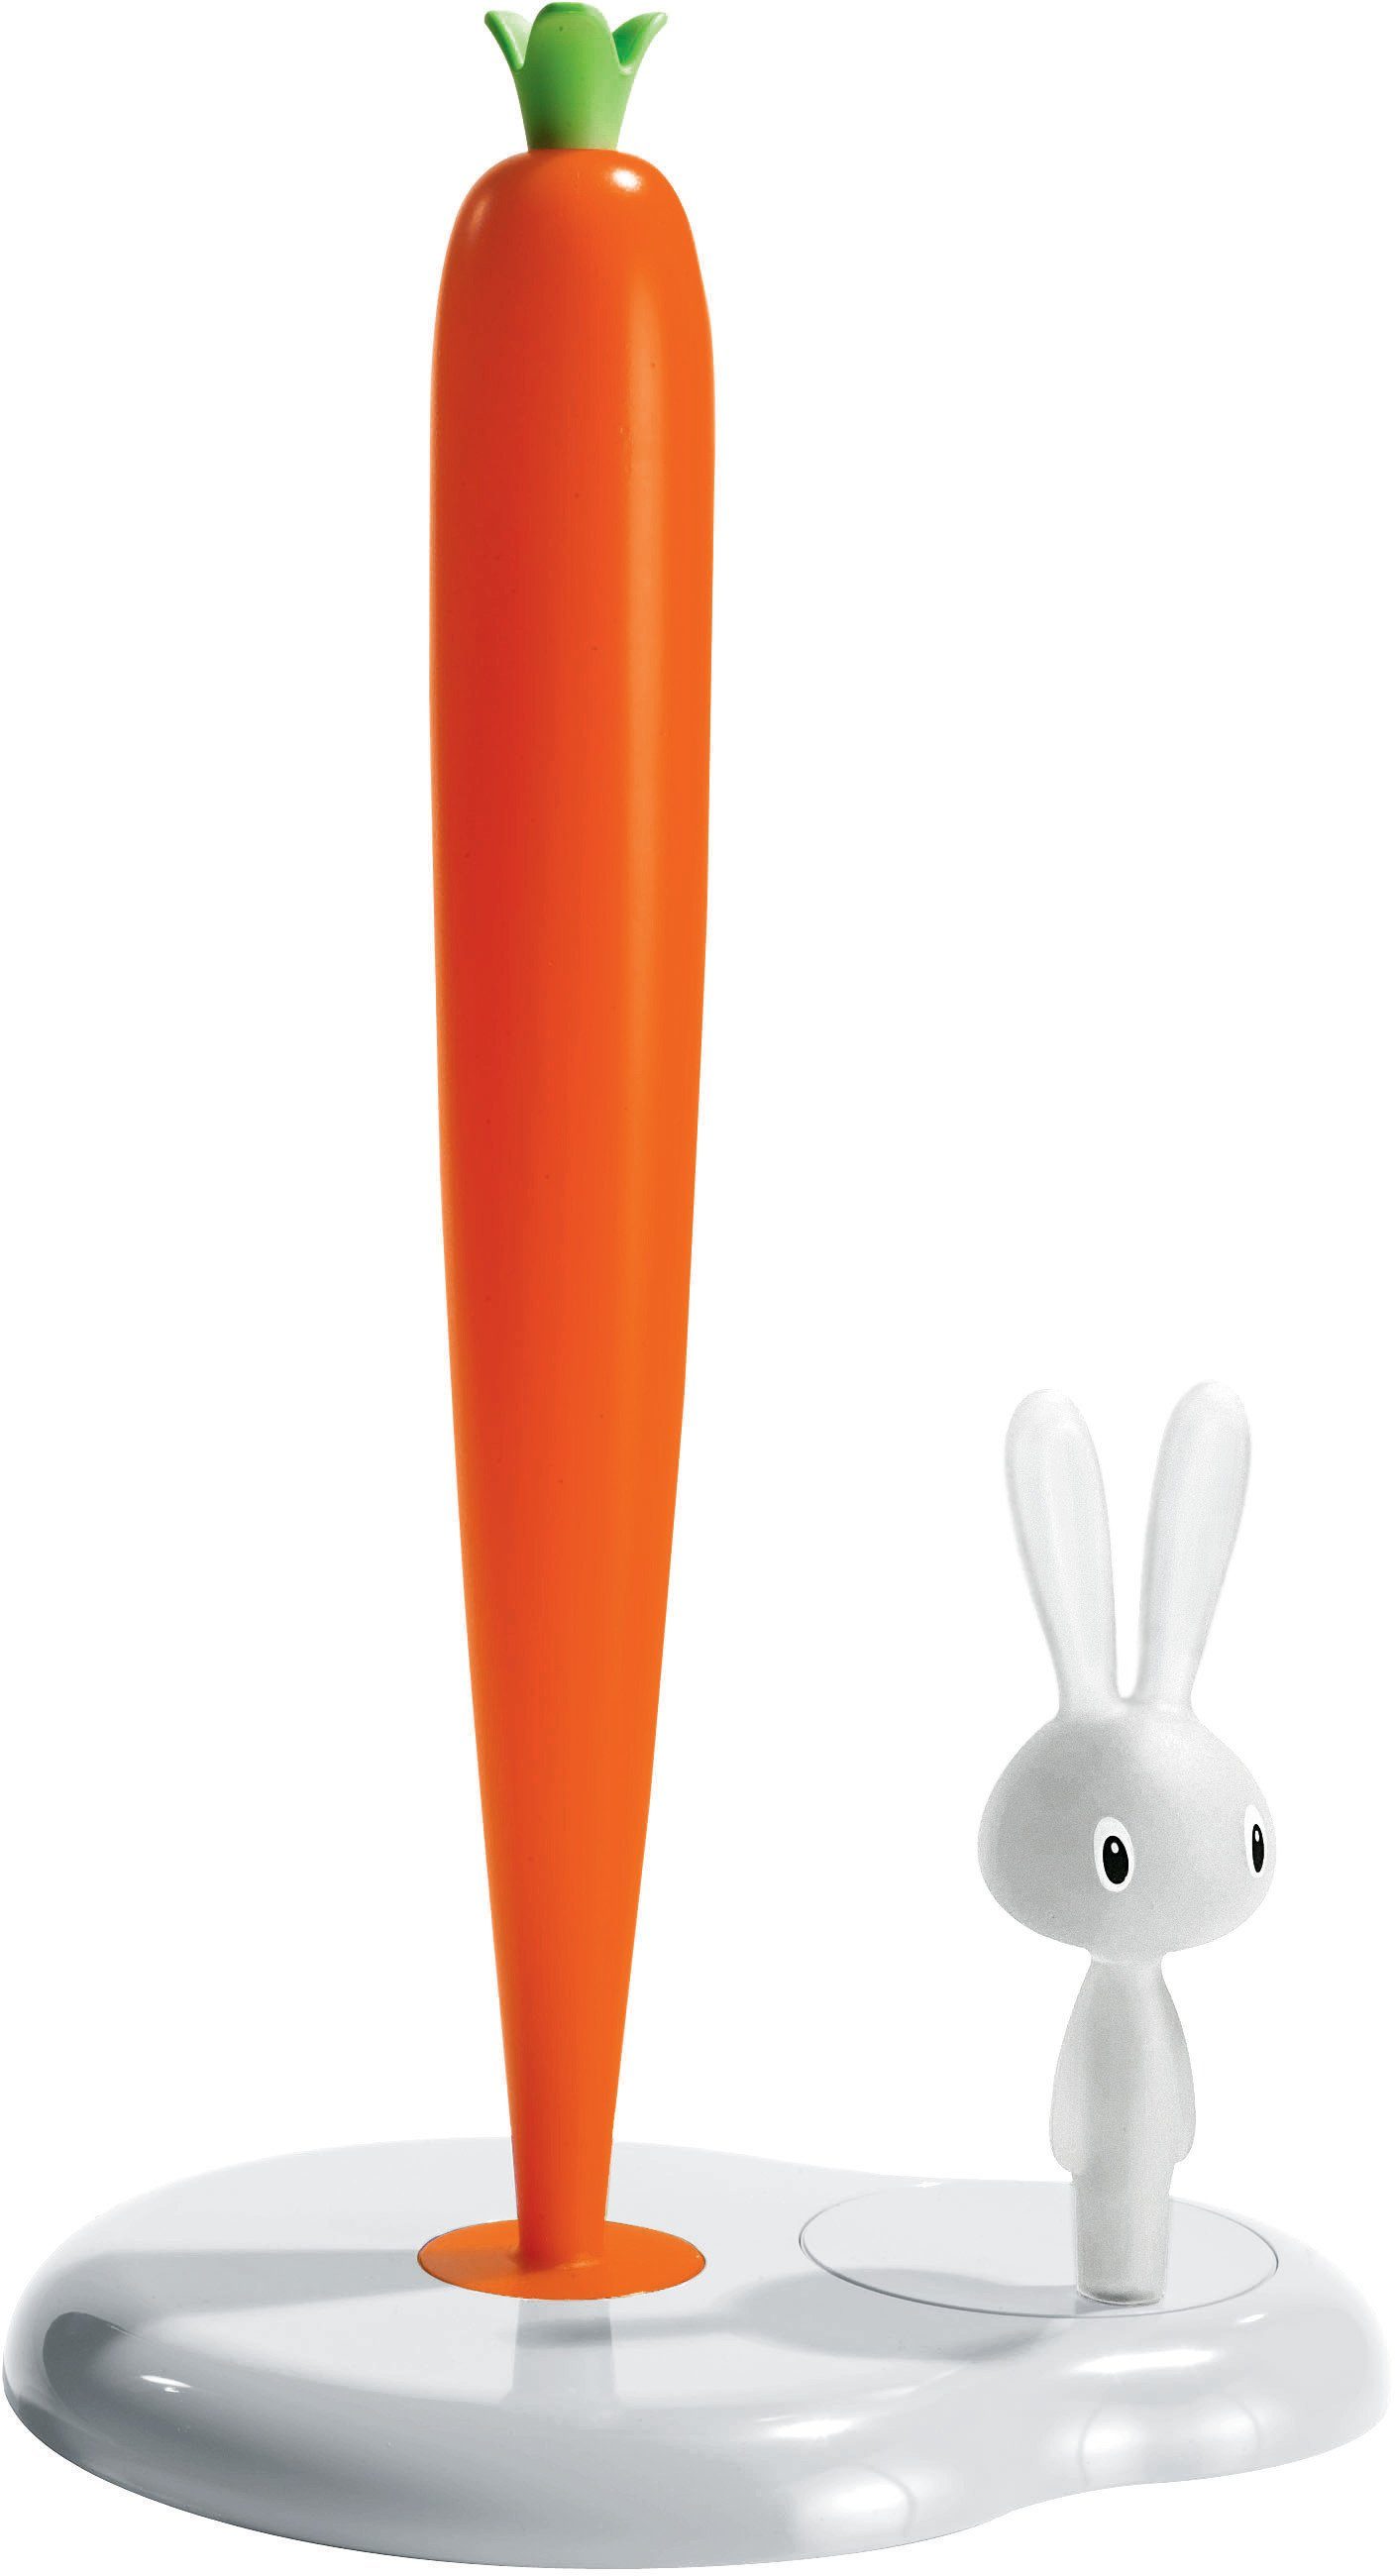 (Packung) Küchenrollenhalter Carrot, & Alessi Bunny